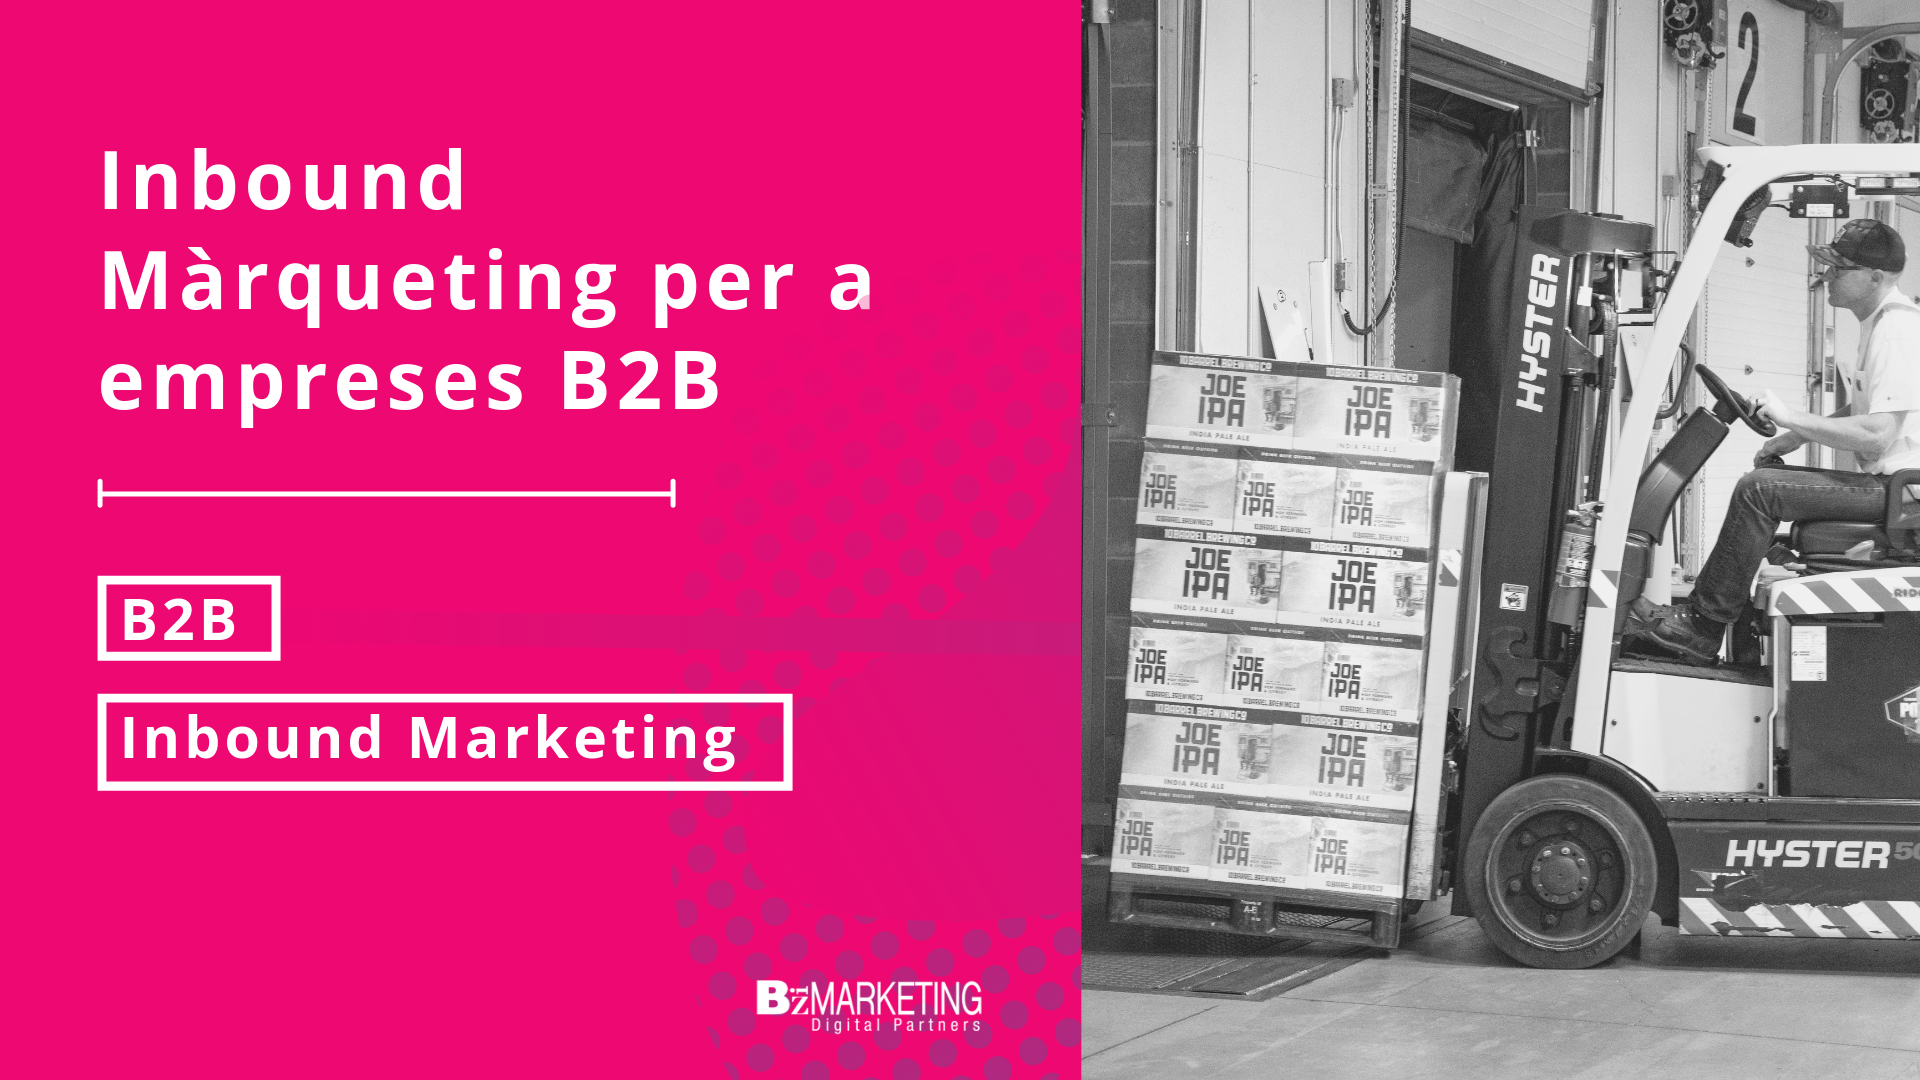 inbound-marqueting-per-empreses-b2b-bizmarketing